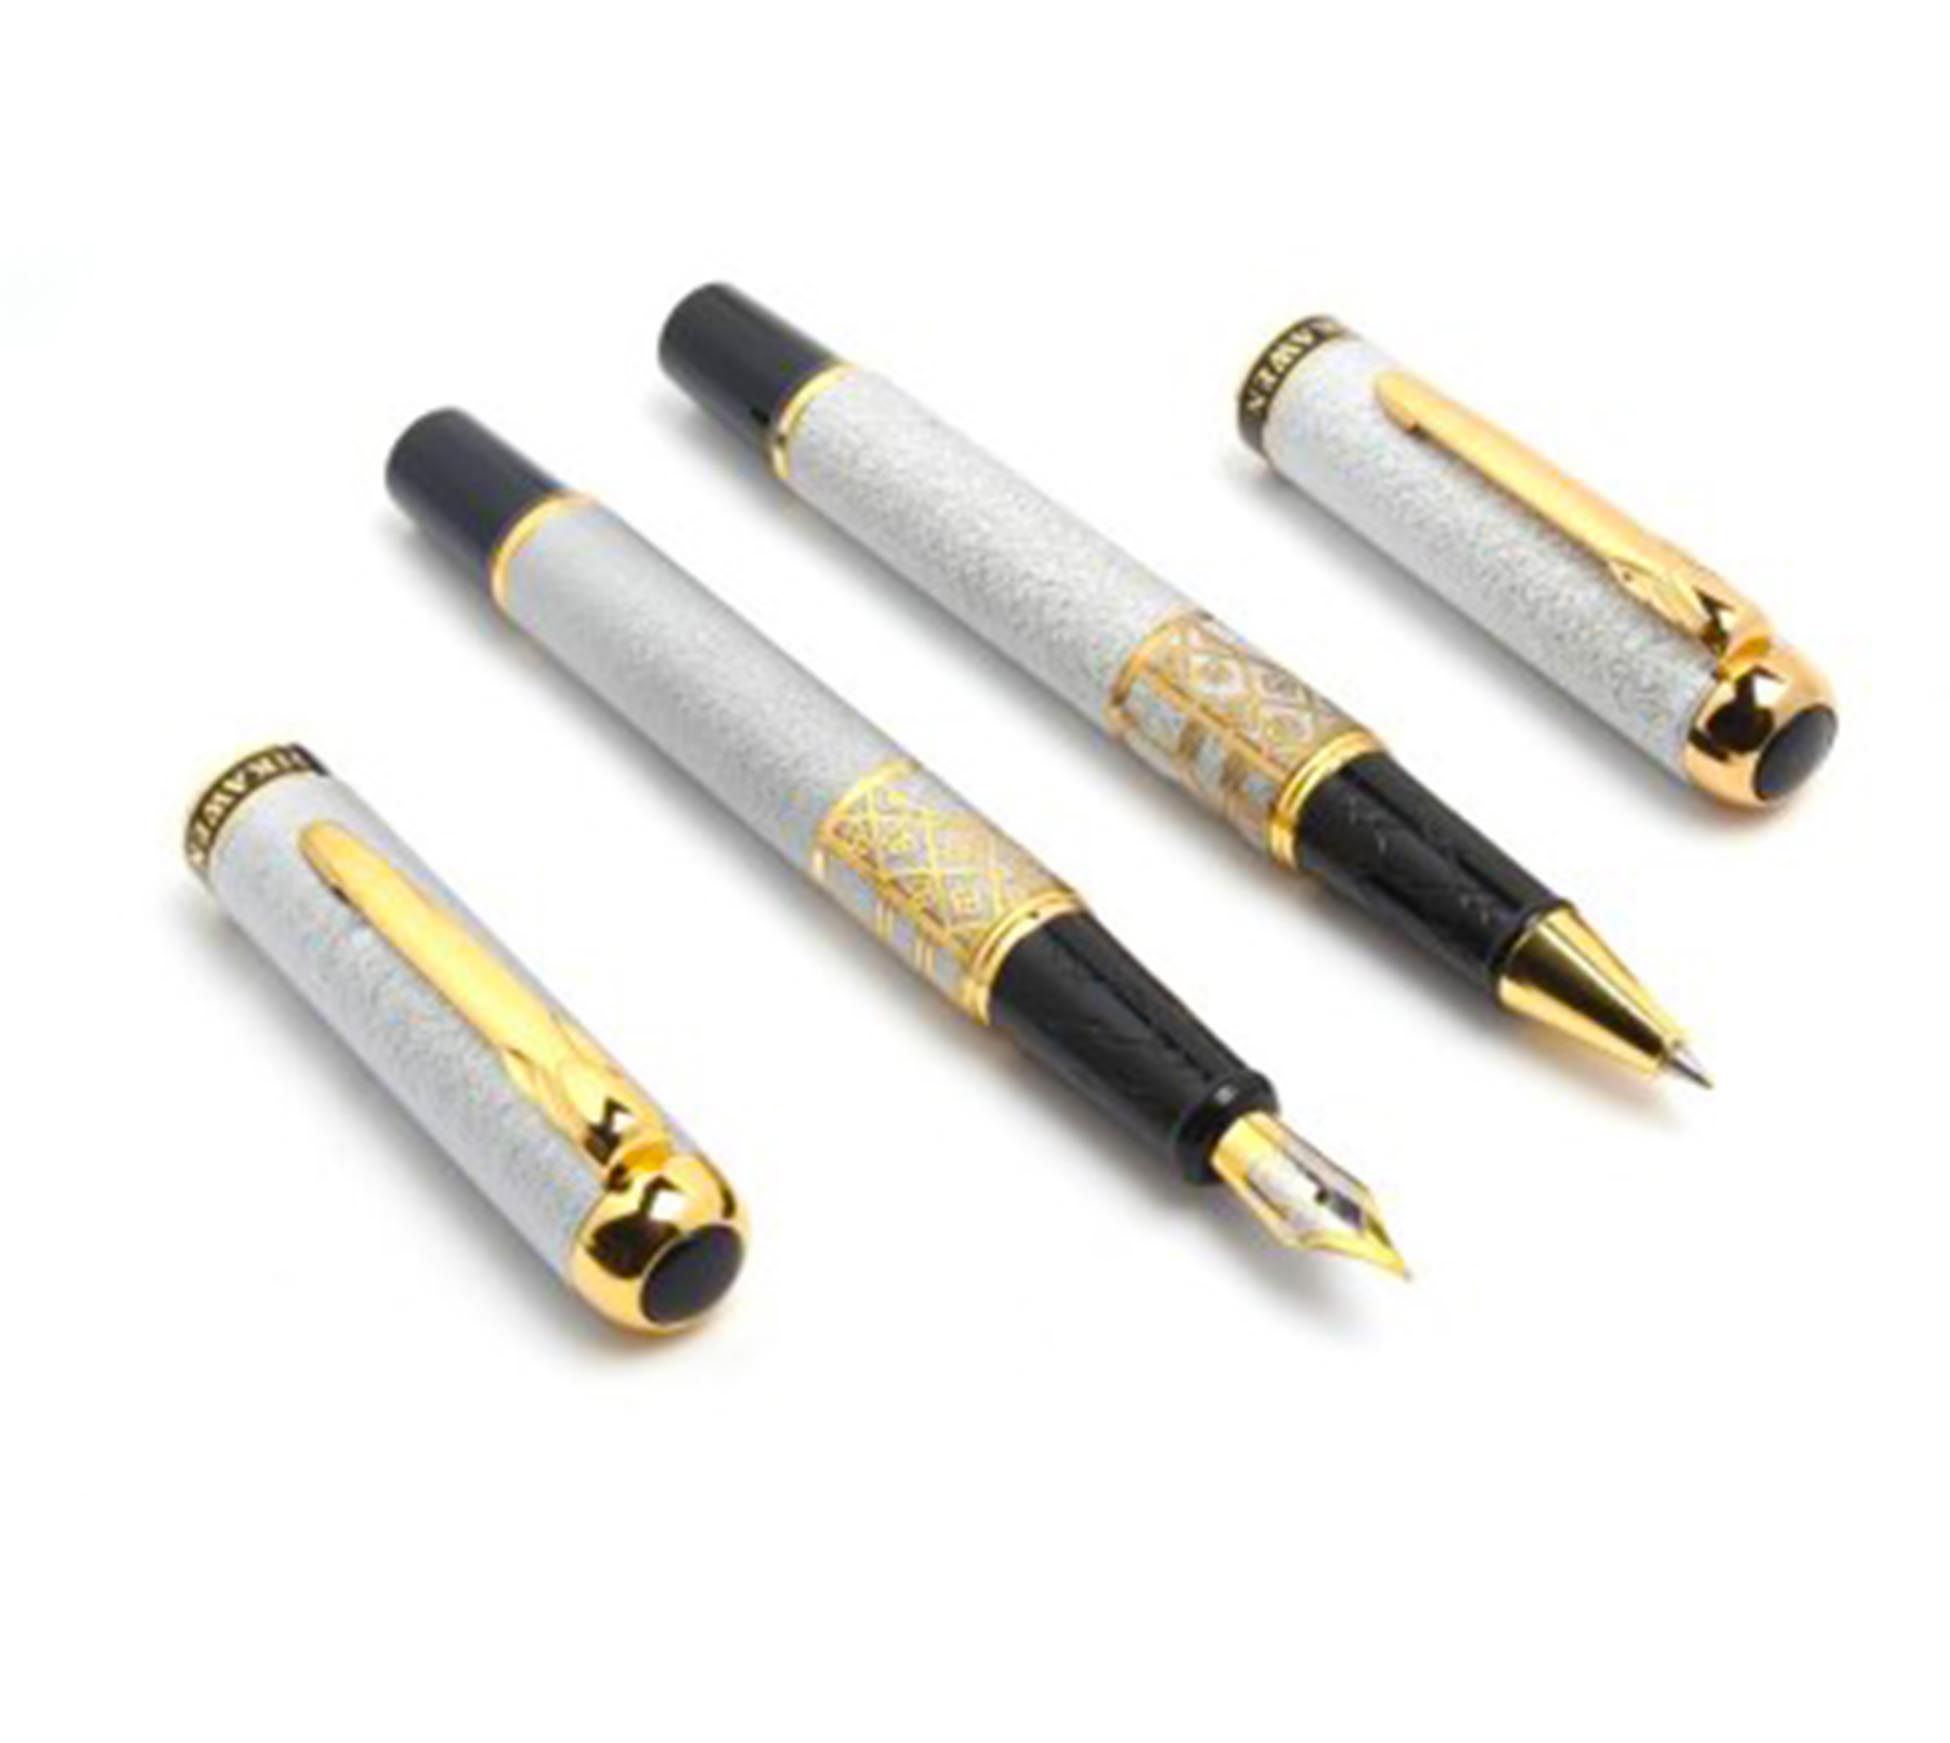     			Dikawen Premium 827 Sand Metal Finish Fountain Ink Pen & Roller Ball Pen Gift Set.